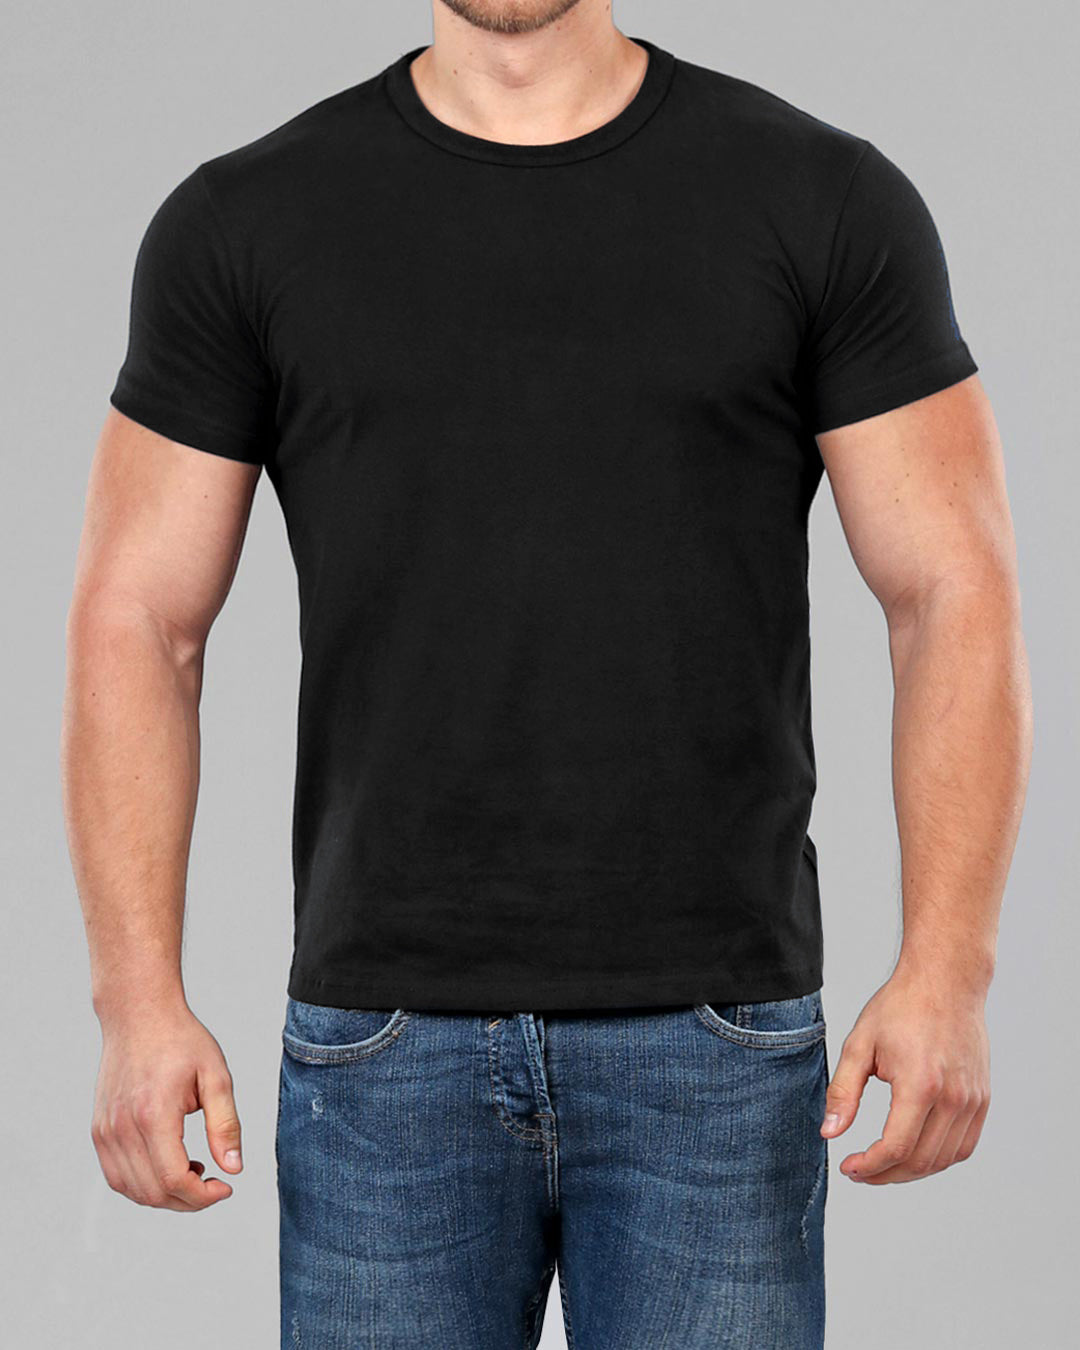 snorkel mærkning Jane Austen Men's Black Crew Neck Fitted Plain T-Shirt | Muscle Fit Basics